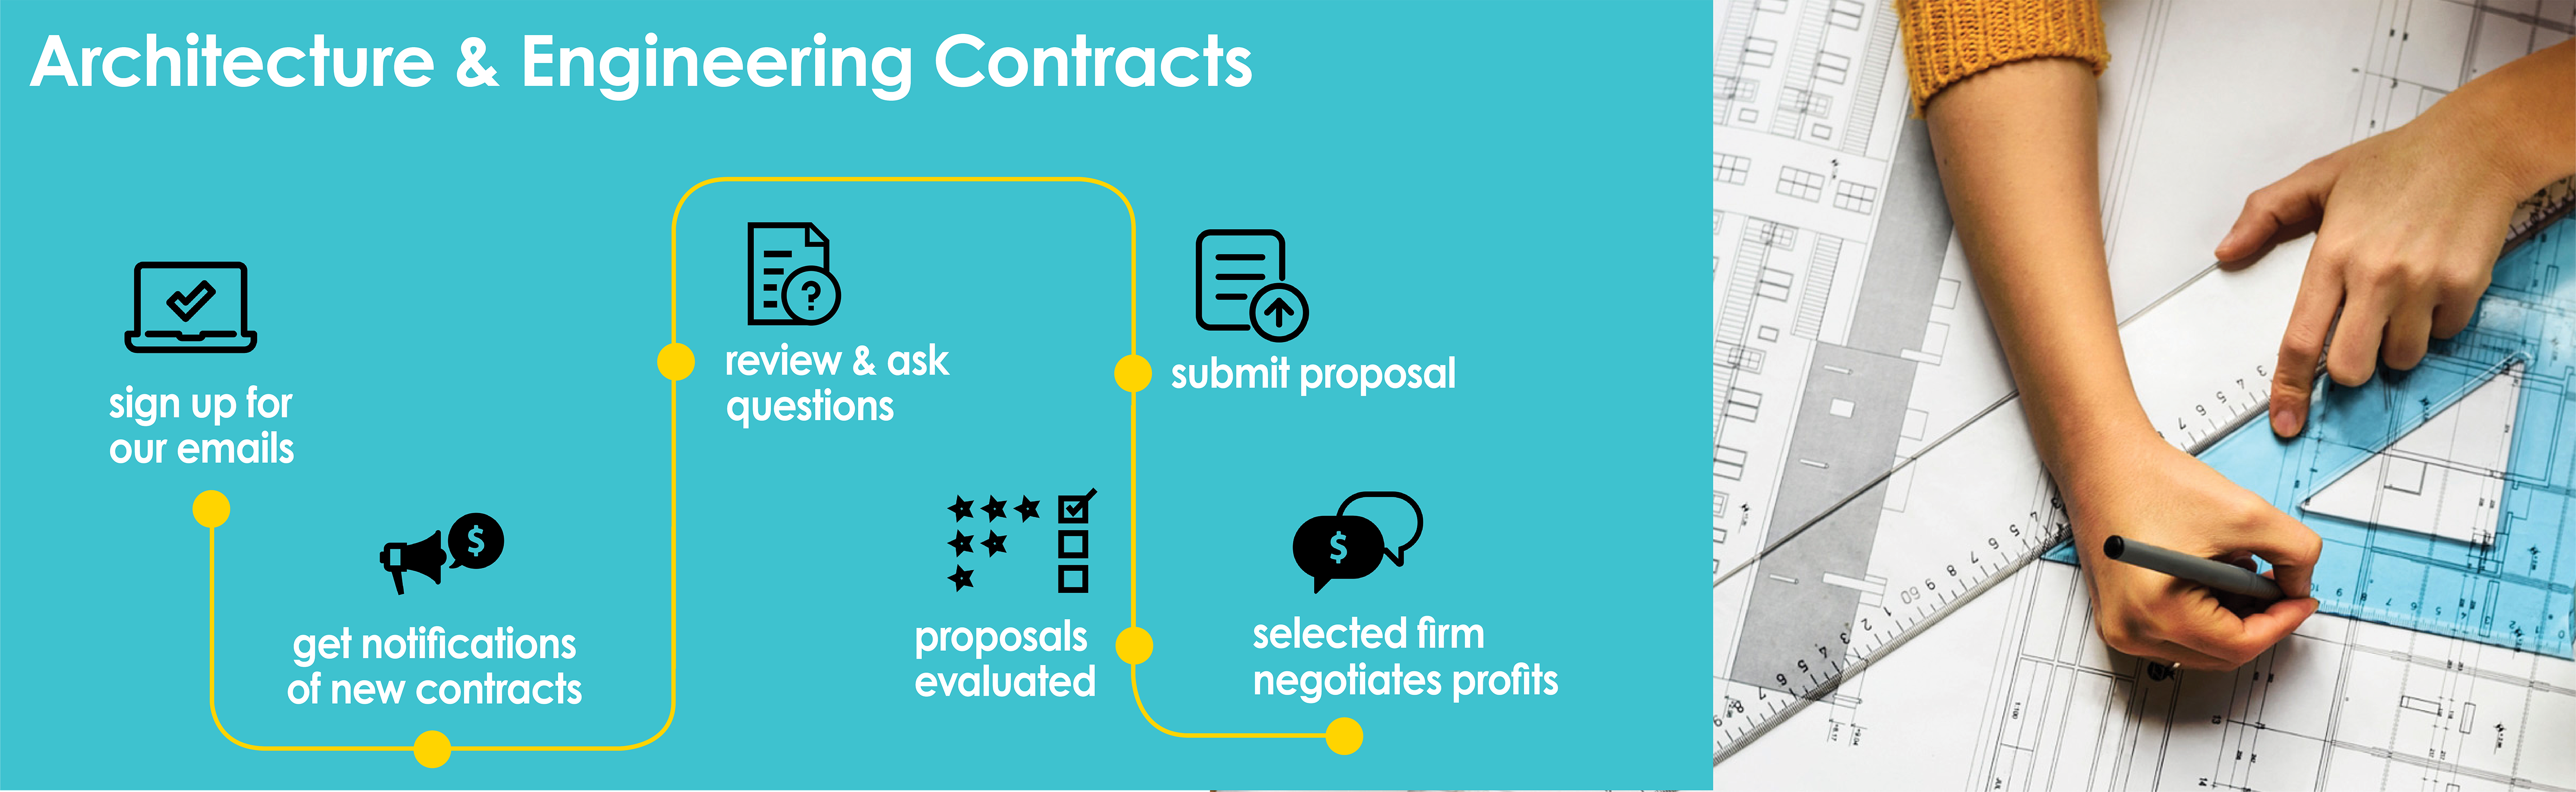 AE_contract_process_roadmap_web